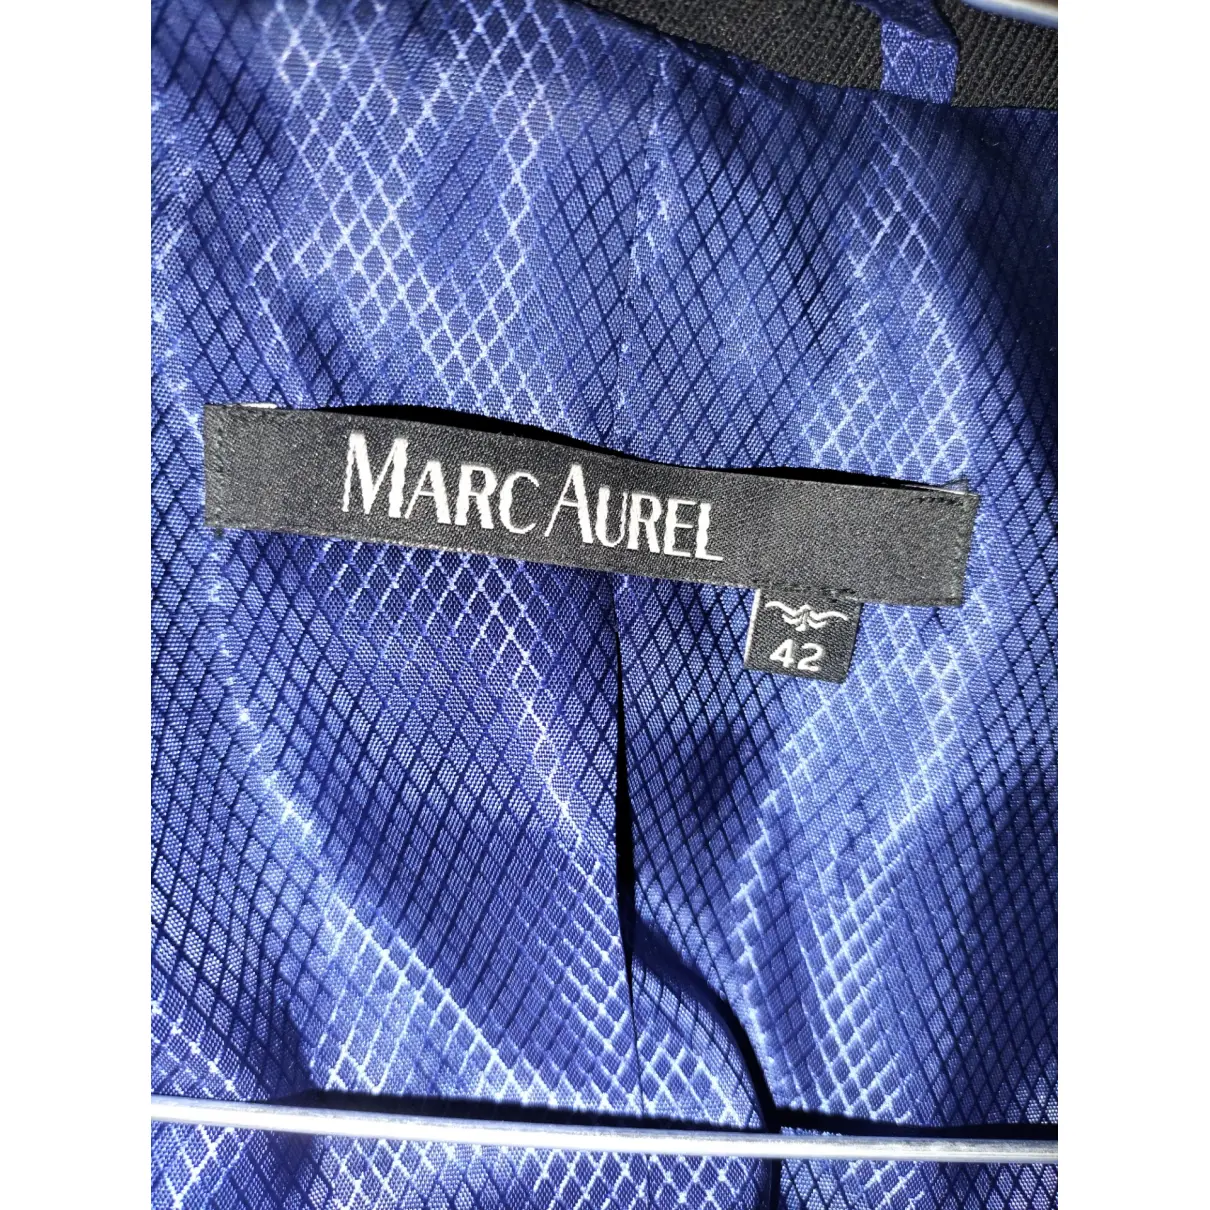 Leather jacket Marc Aurel